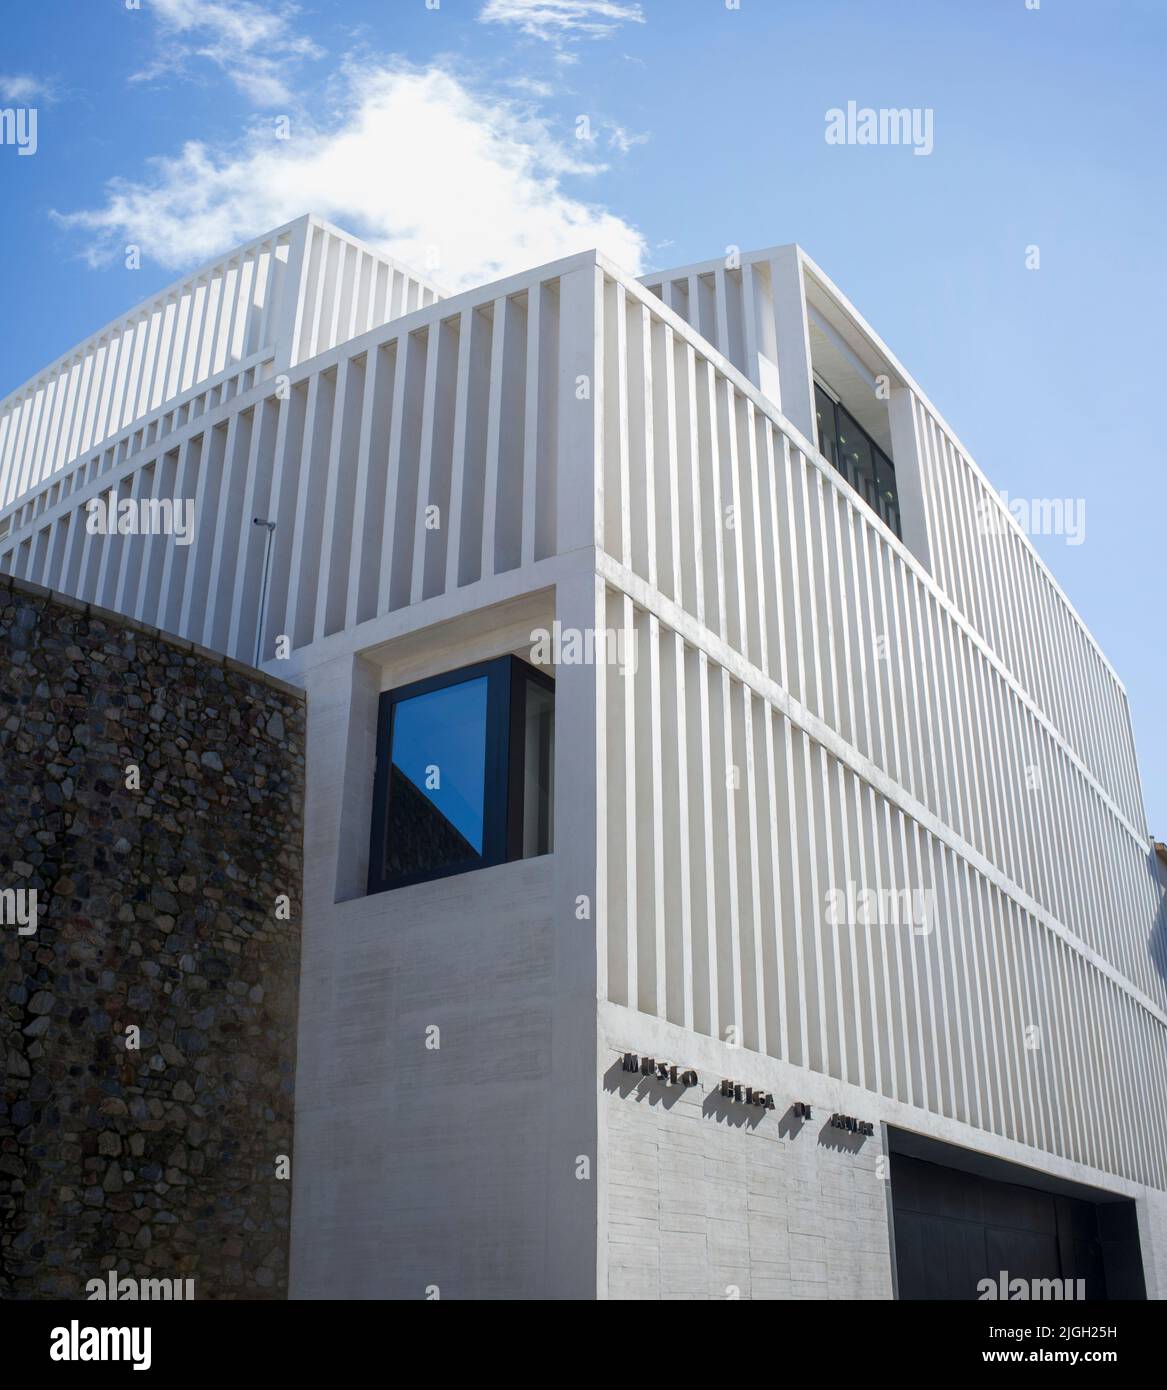 Cáceres, España - 23 de febrero de 2021: Fundación Helga de Alvear Centro de Artes Visuales de Cáceres, Extremadura, España. Edificio de la calle camino Llano Foto de stock